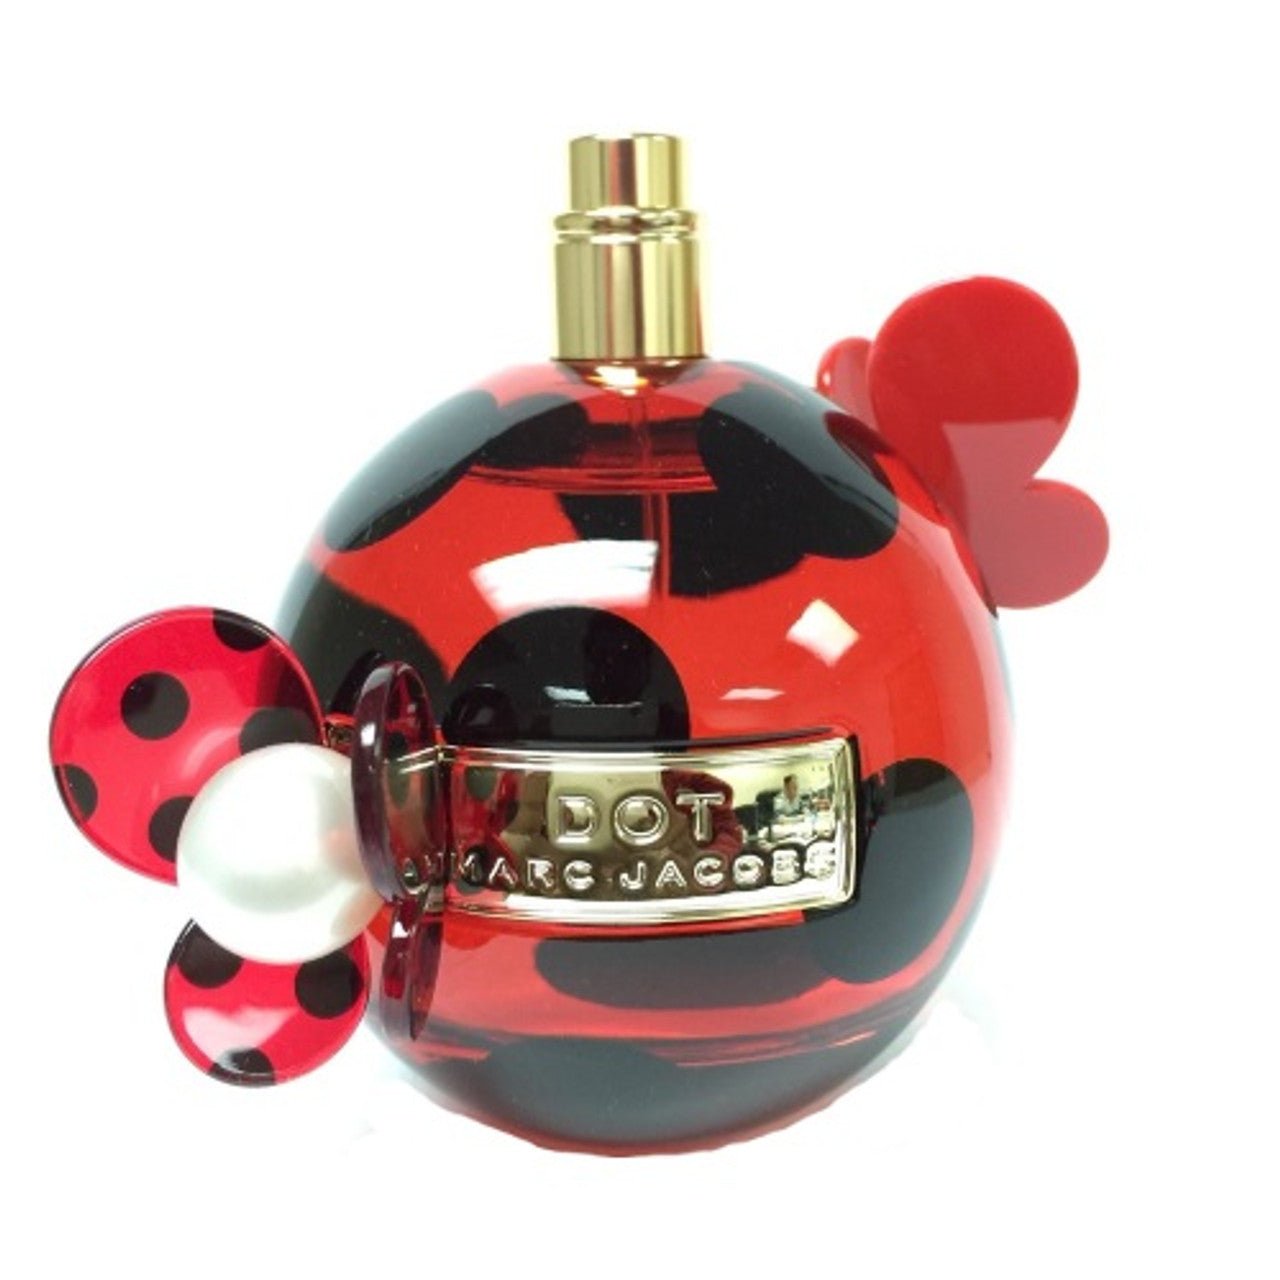 Marc Jacobs Dot EDP | My Perfume Shop Australia